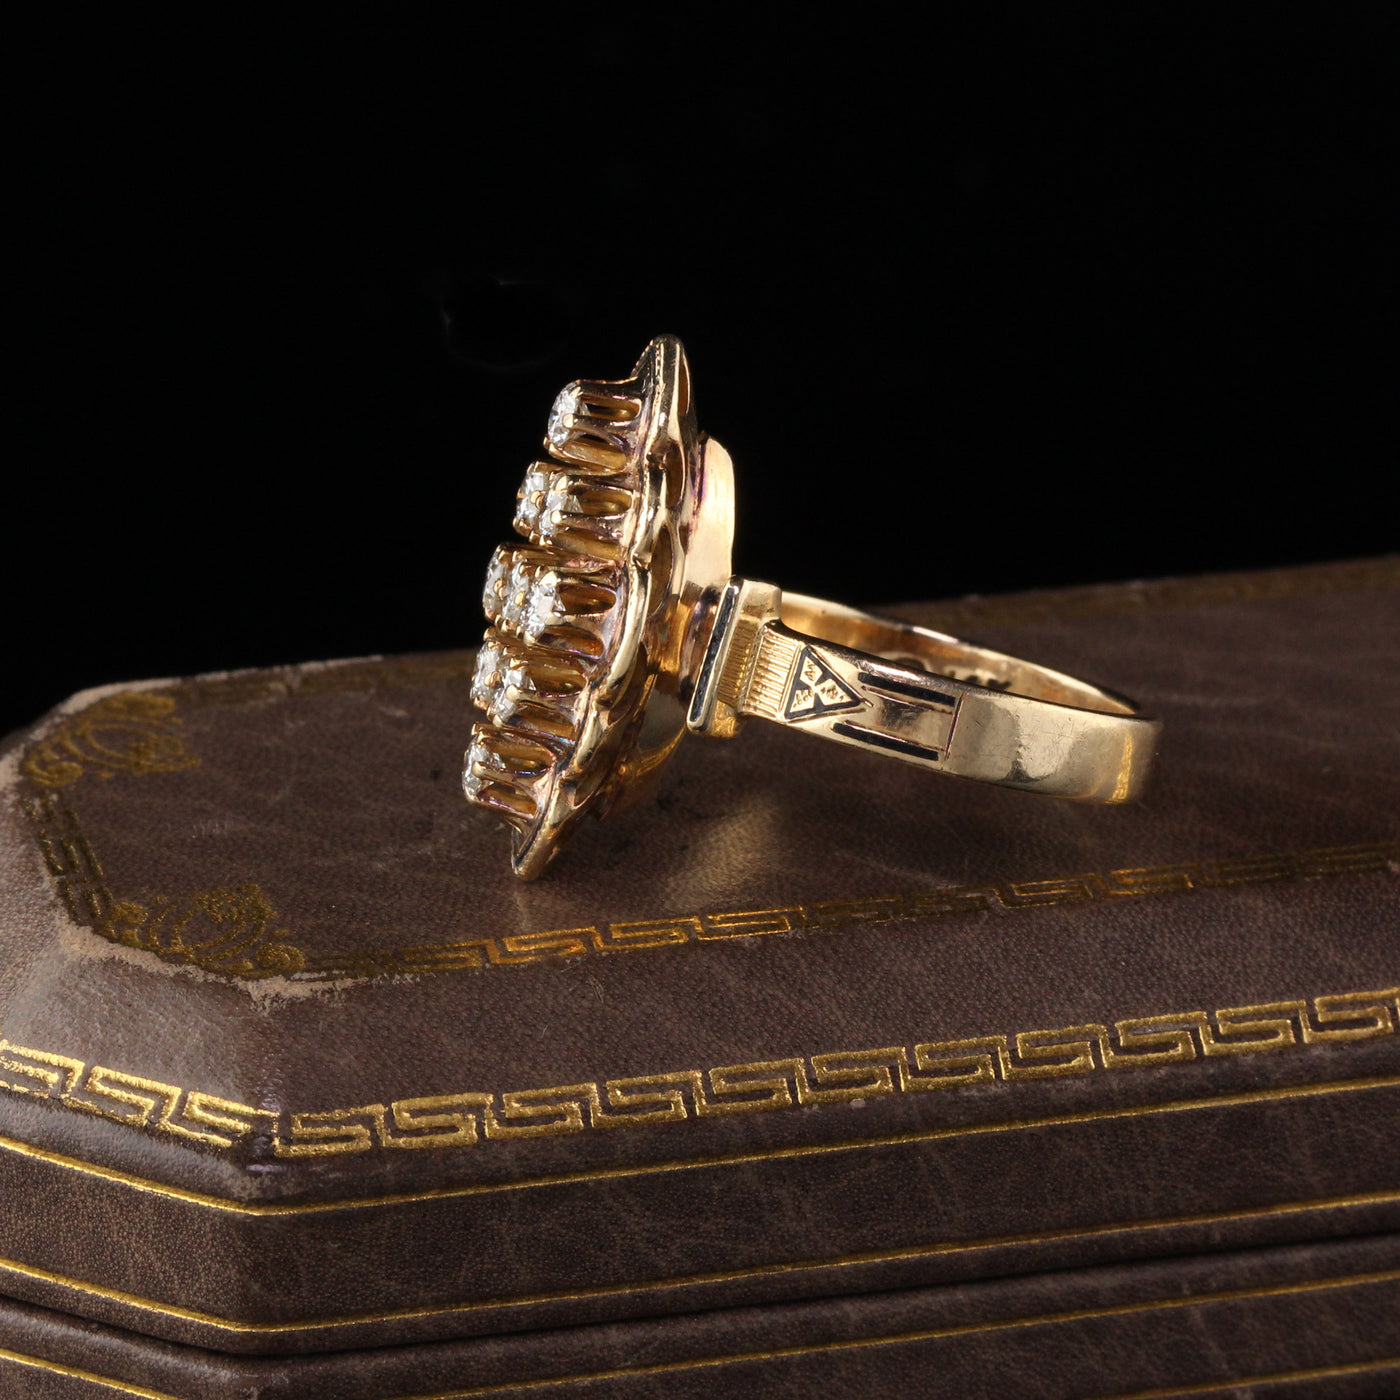 Antique Victorian 14K Yellow Gold Diamond Navette Ring